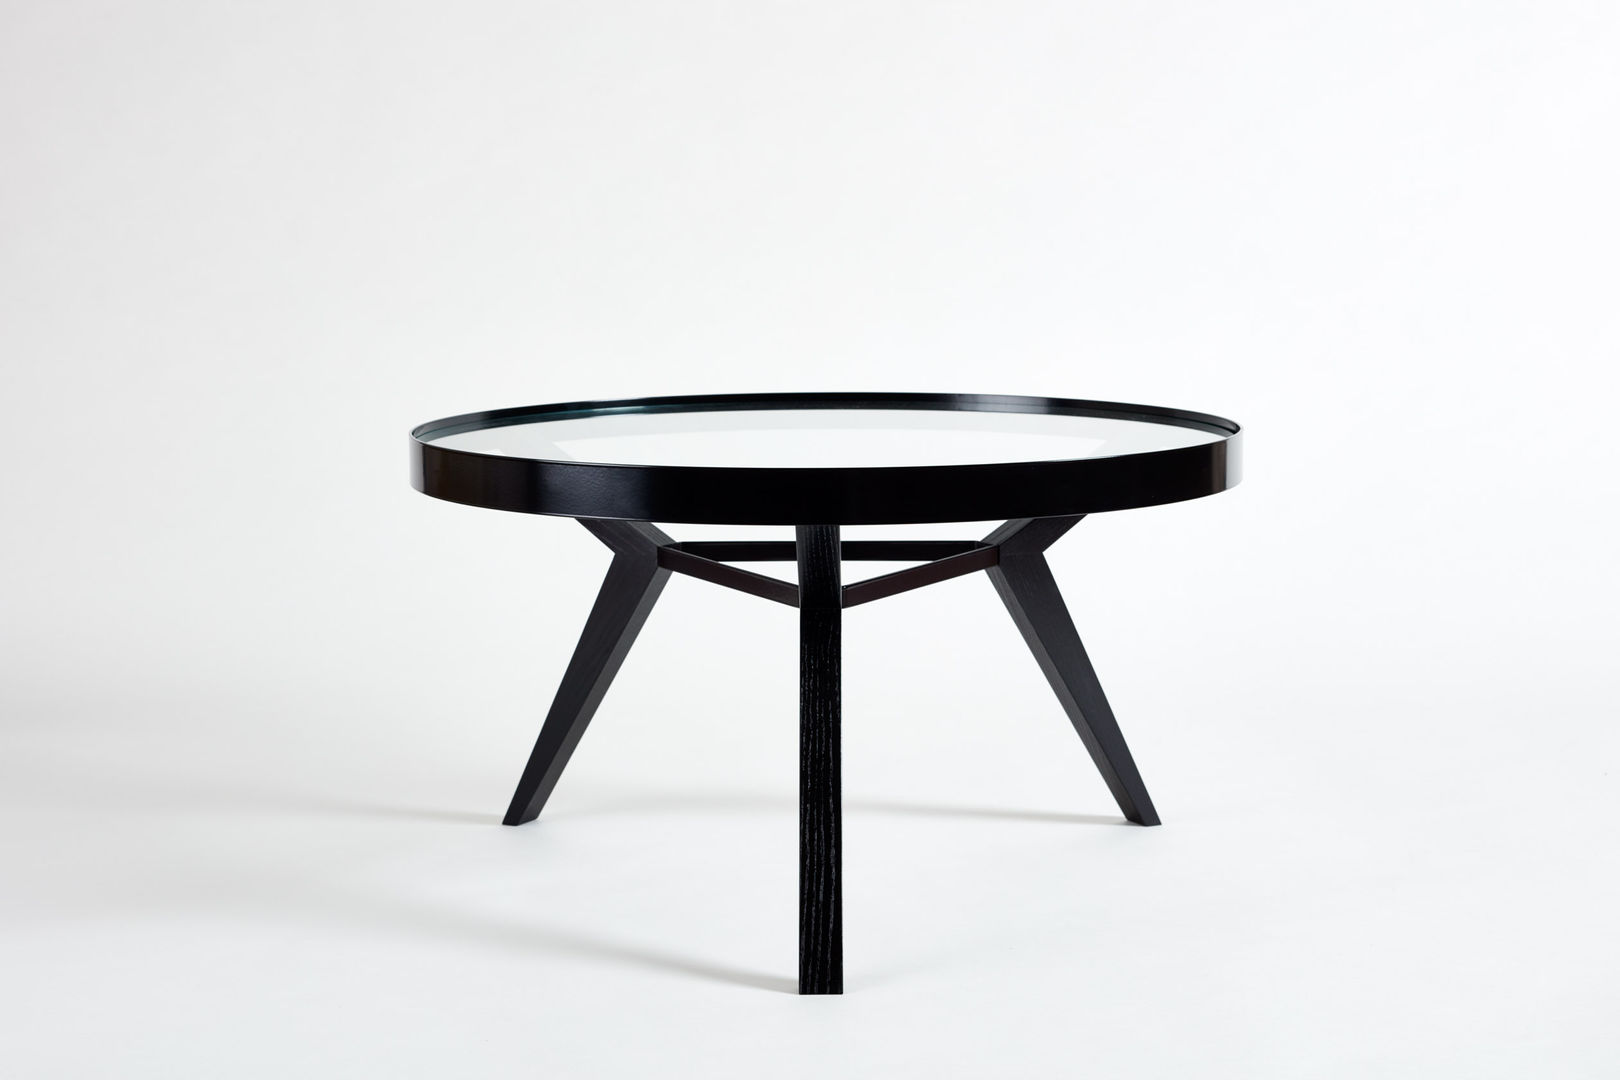 Spot - coffee table, Neuvonfrisch - Möbel und Accessoires Neuvonfrisch - Möbel und Accessoires Modern living room Side tables & trays